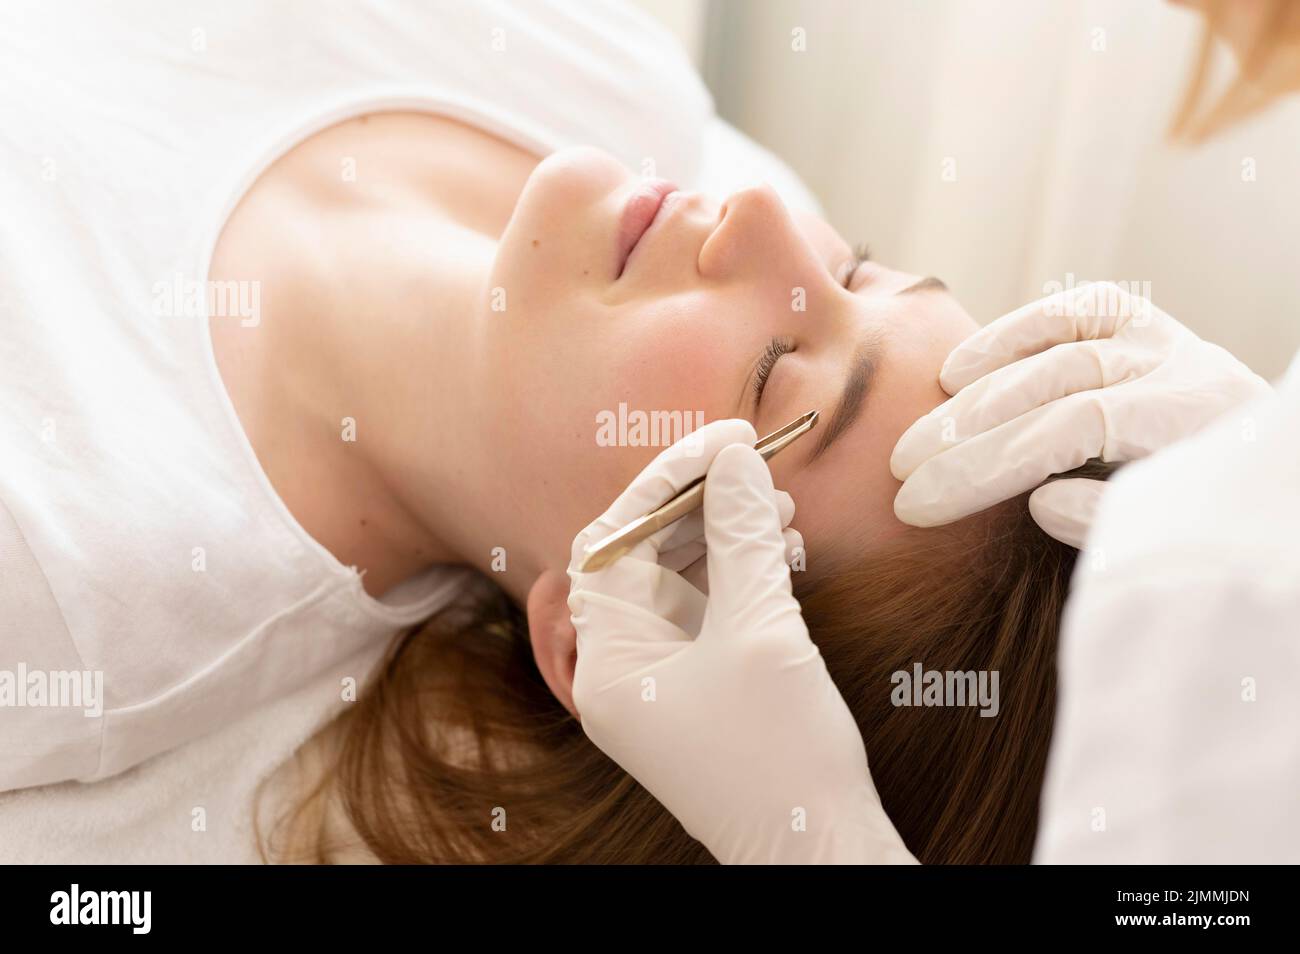 Woman getting eyebrow treatment Stock Photo